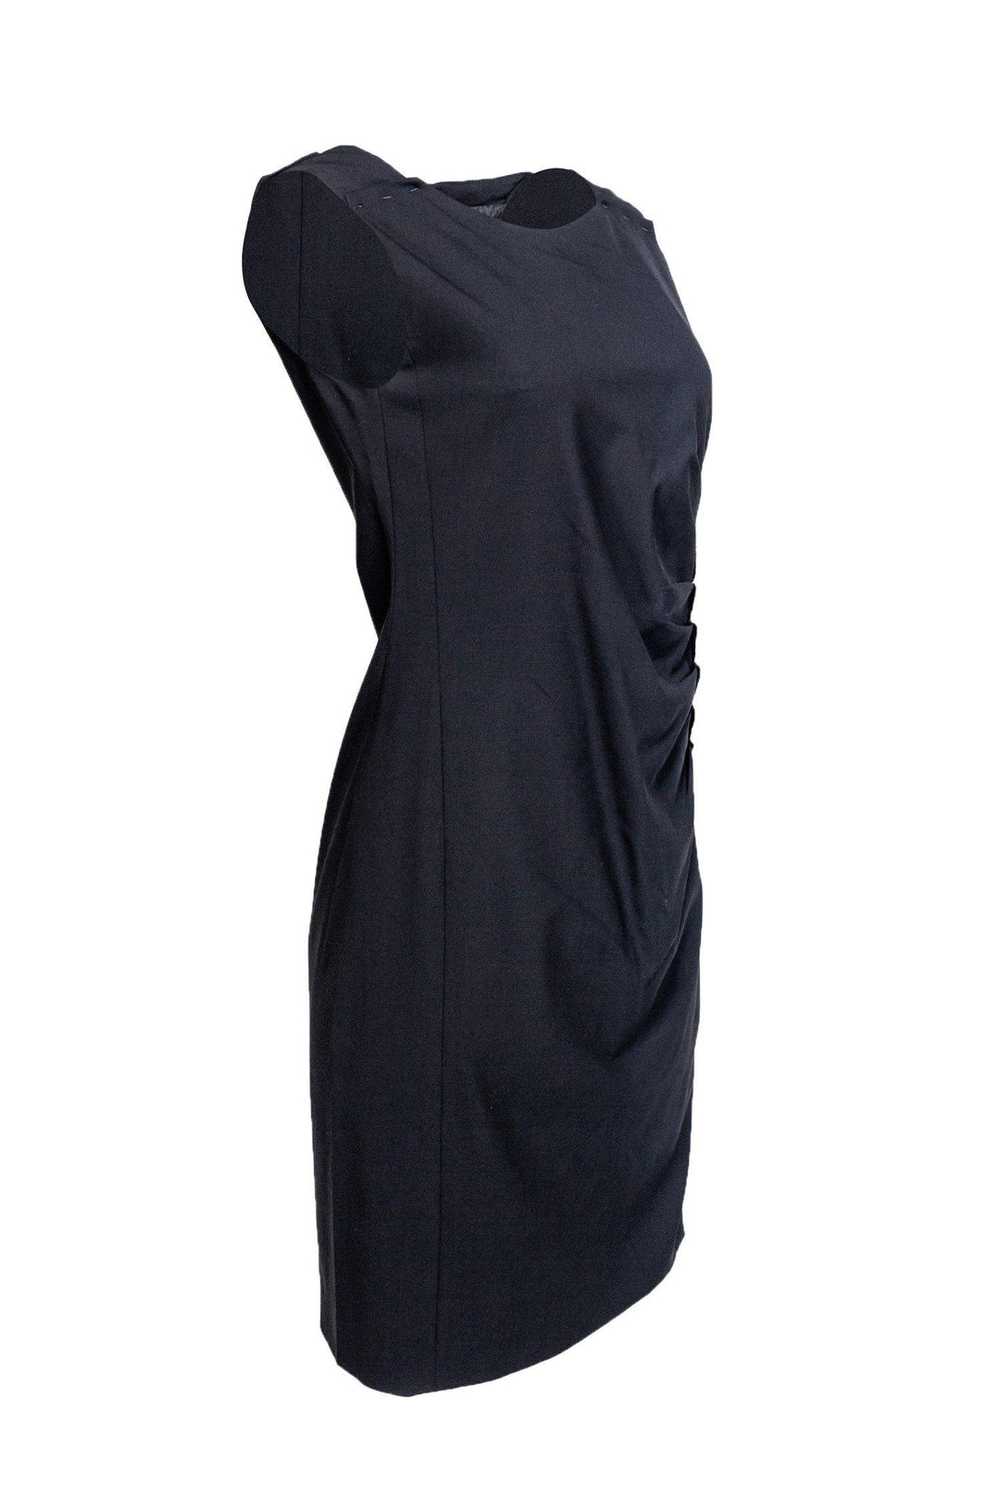 Hugo Boss - Black Dress w/ Pintuck Detail Sz 4 - image 2